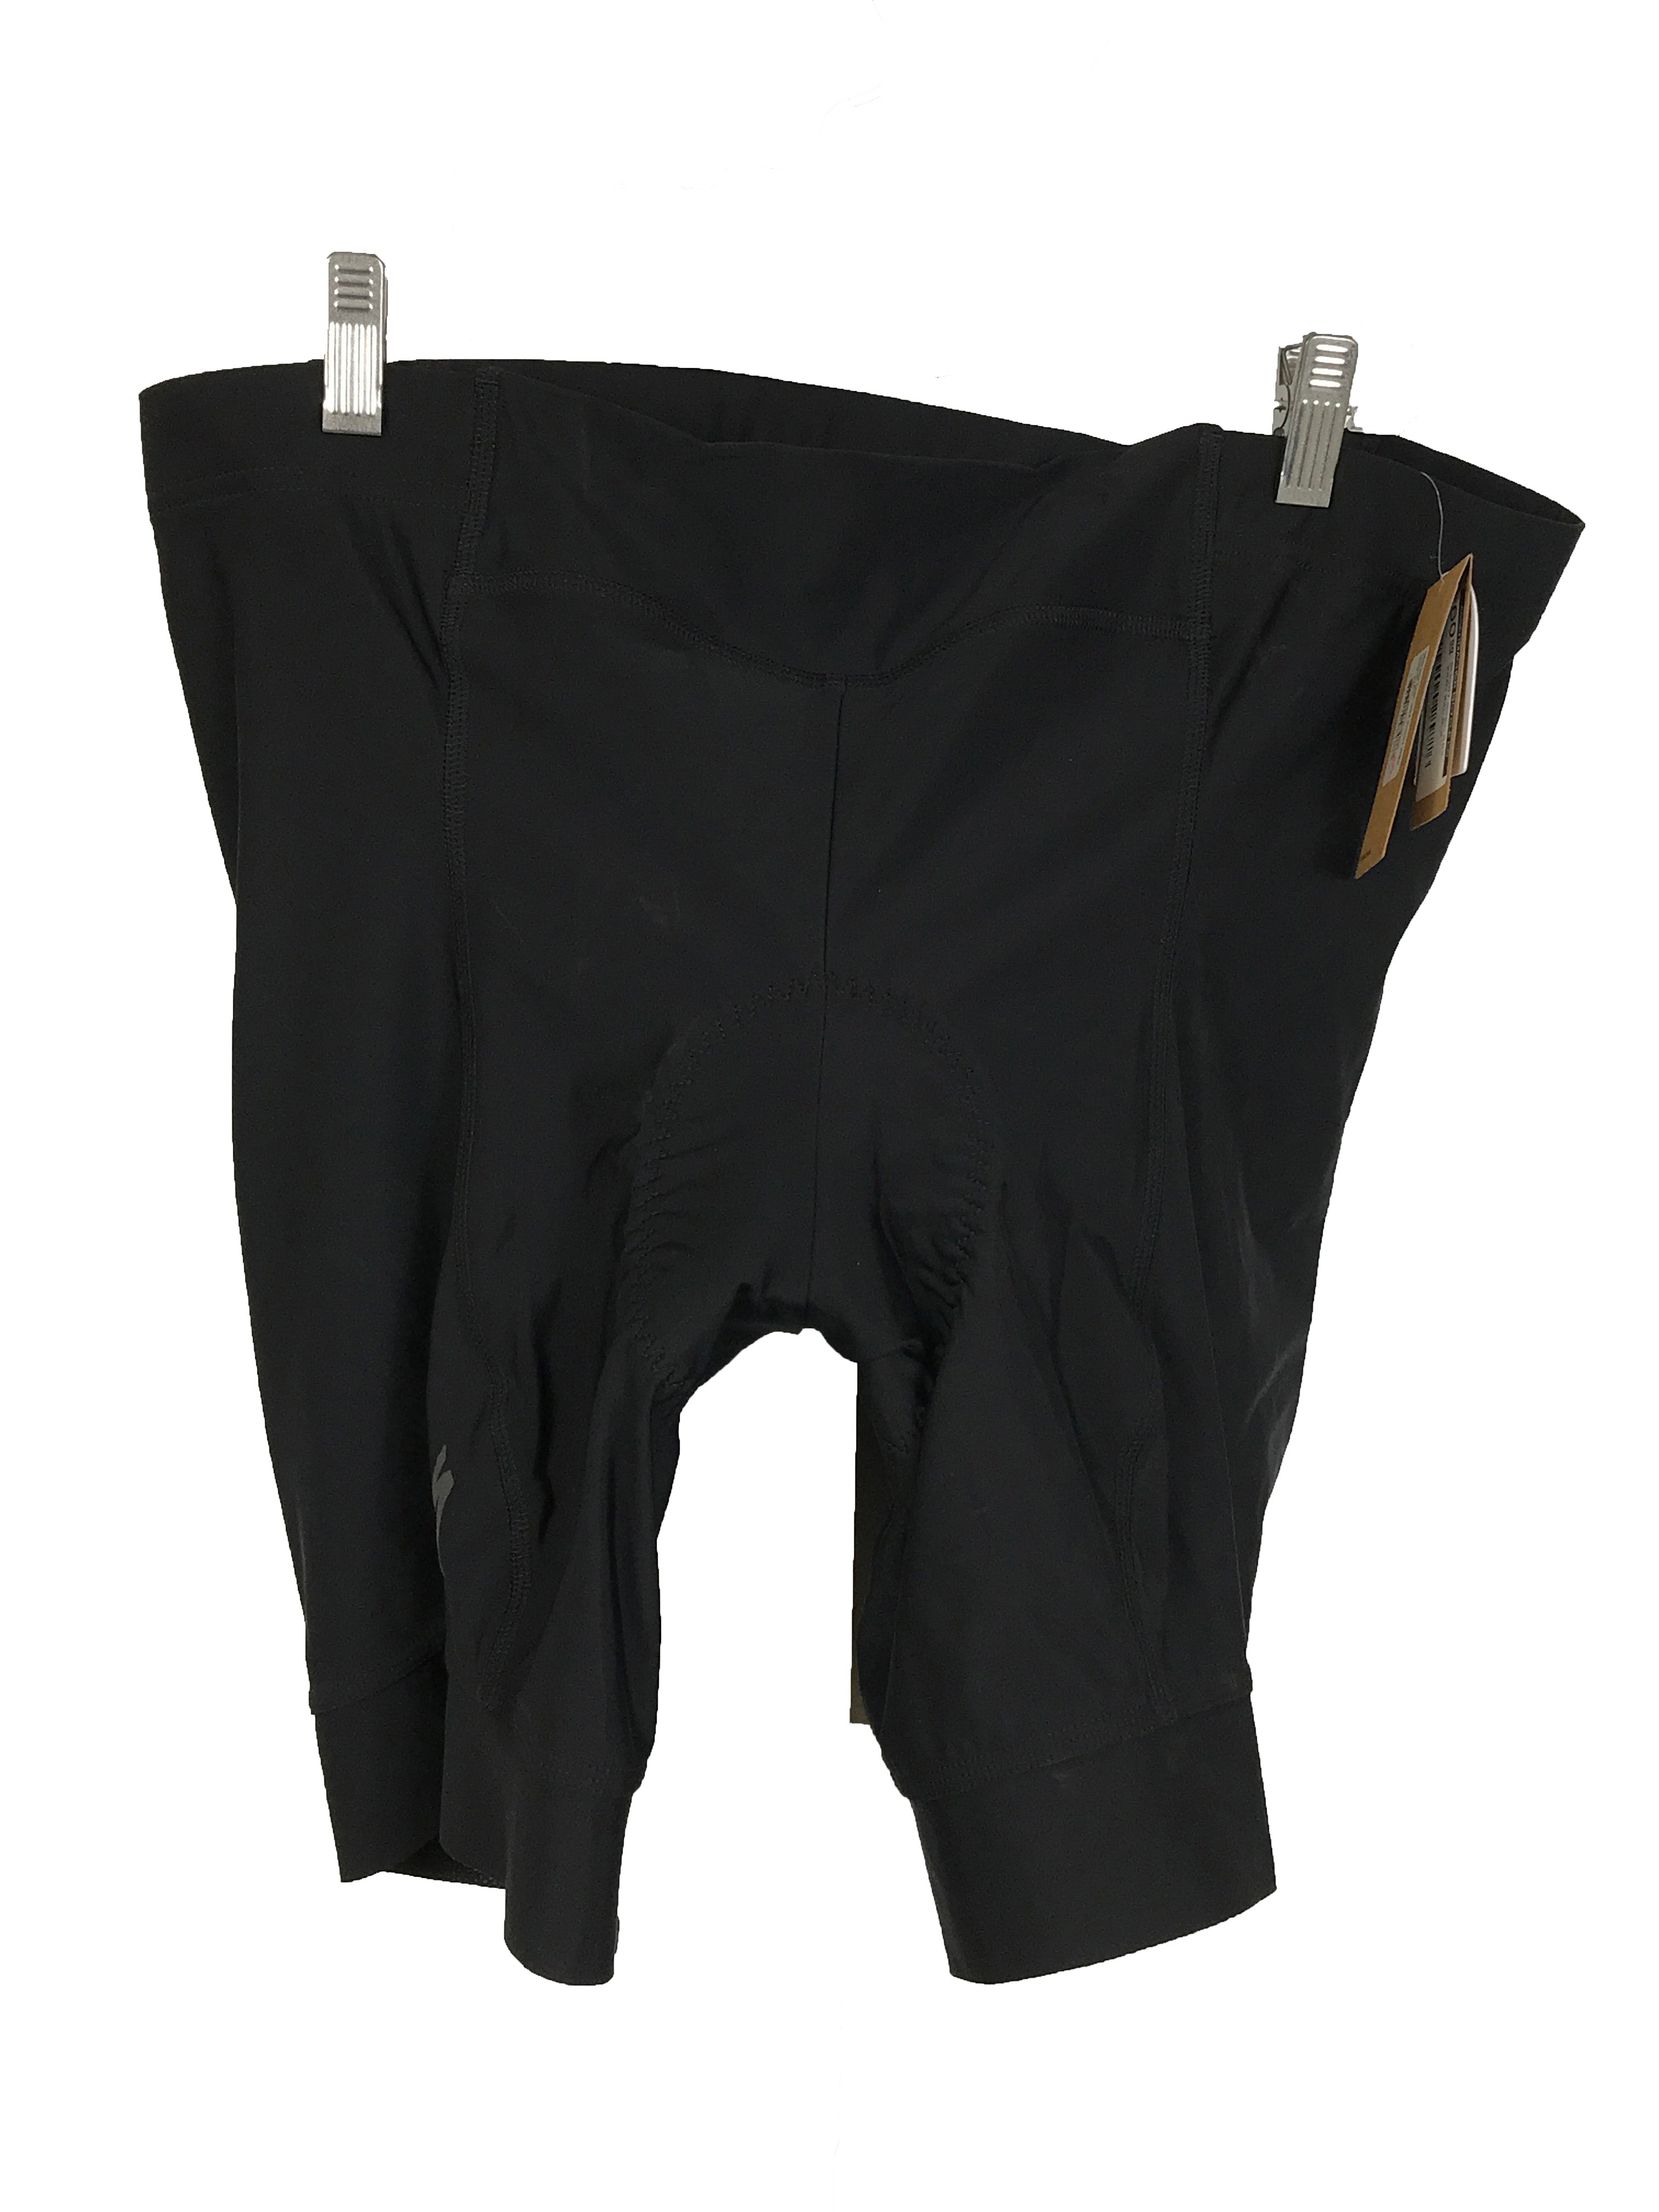 Specialized RBX Black Shorts with Chamois Women's Size 2XL NWT